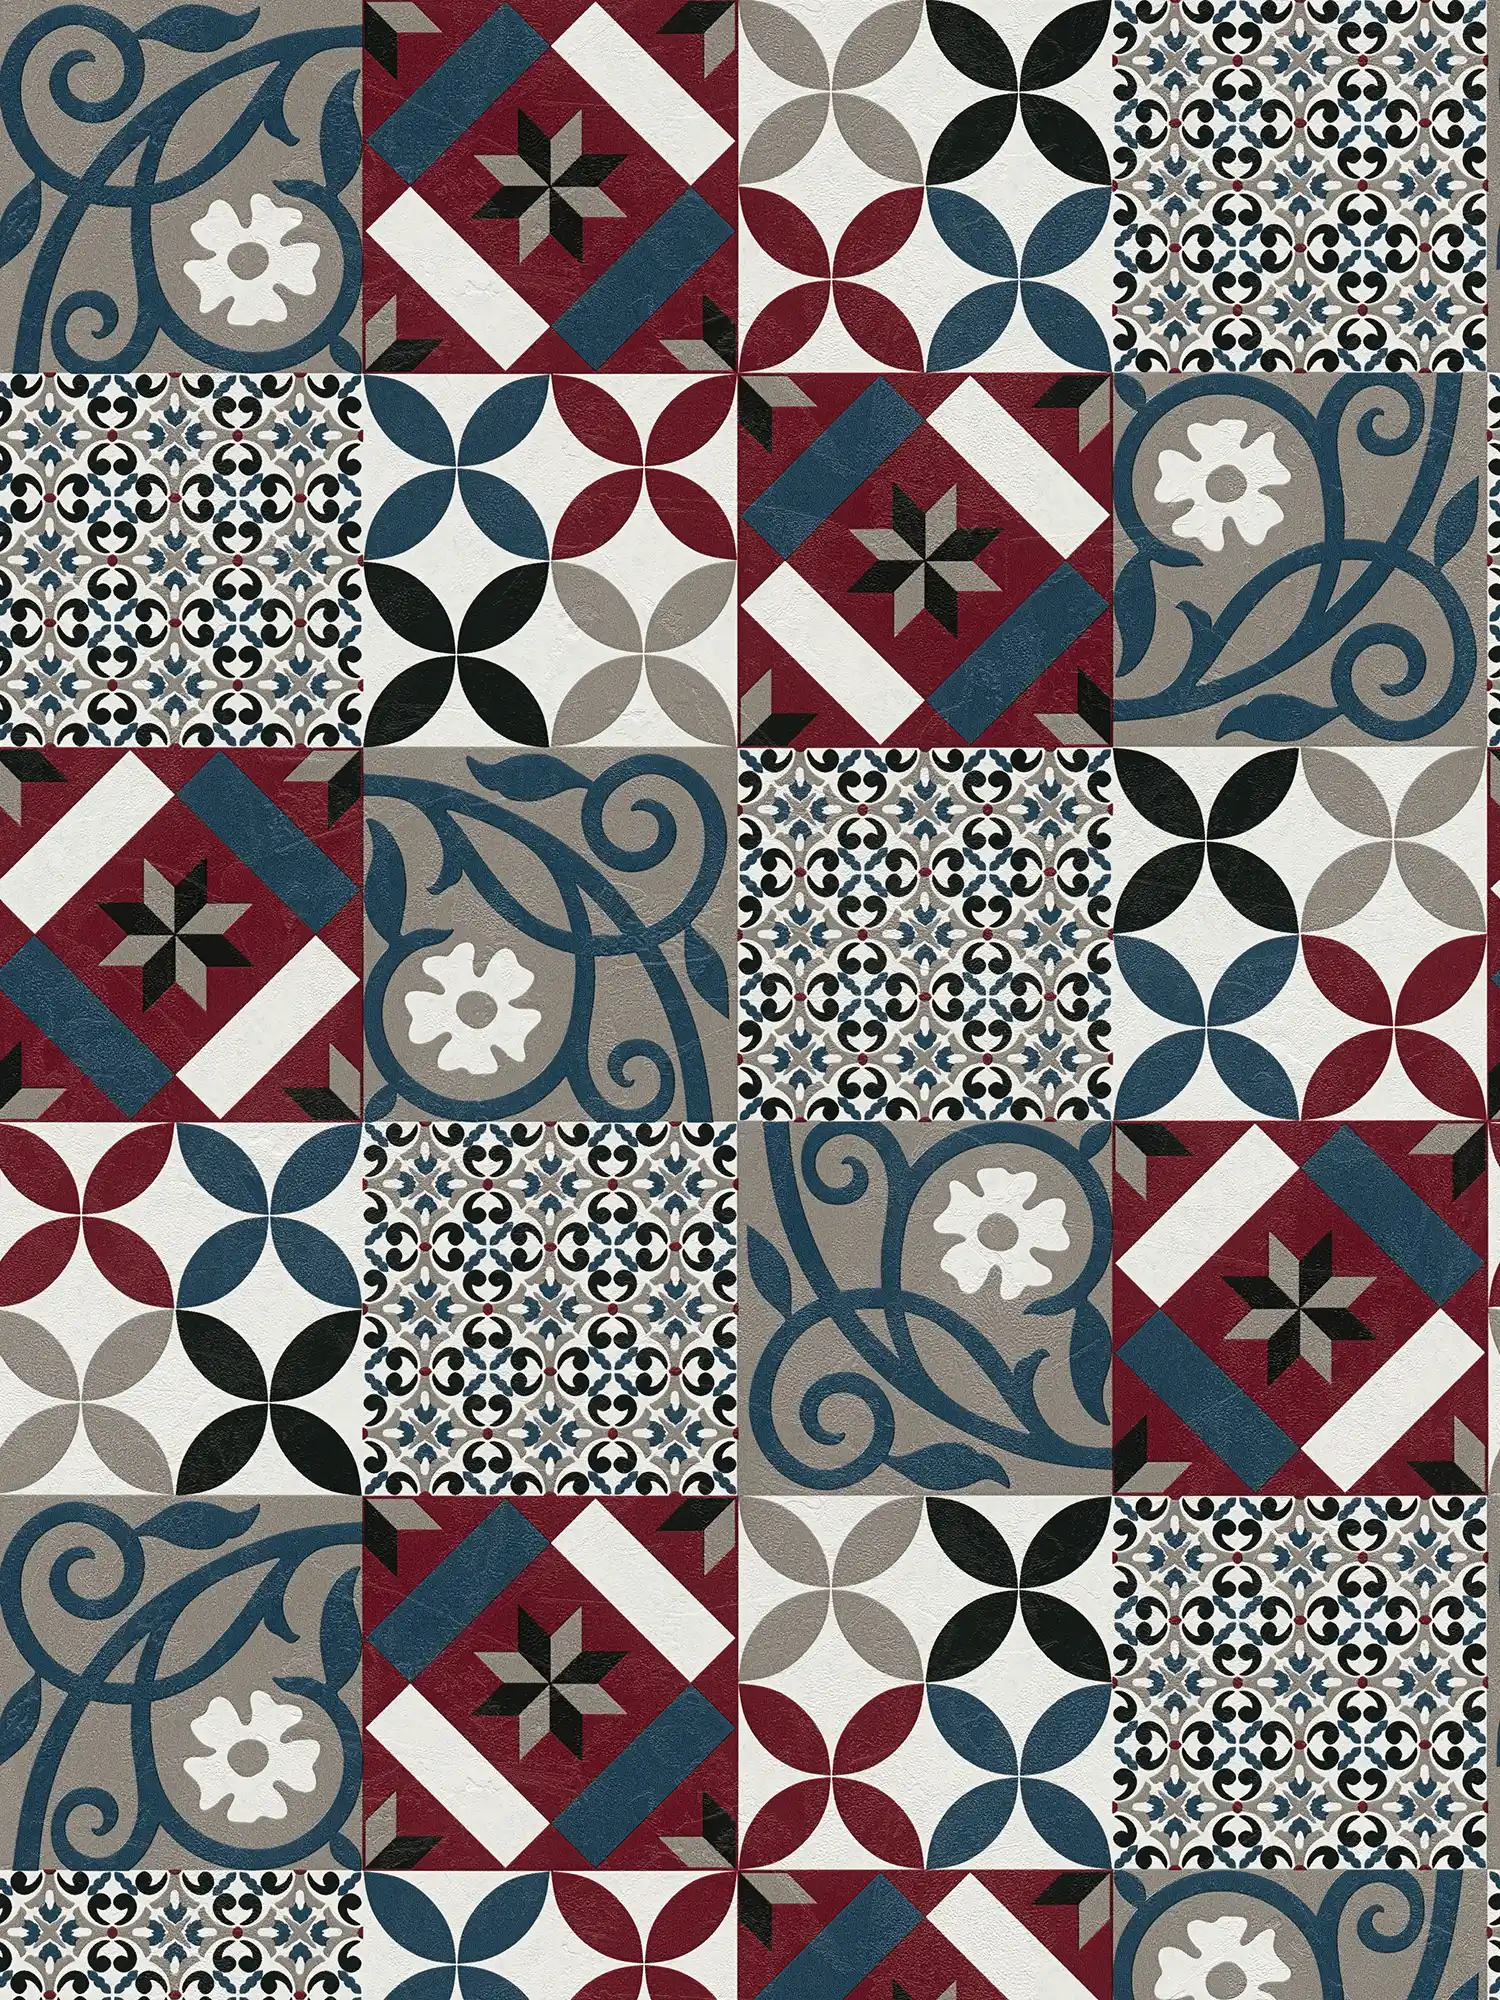 Tile wallpaper mosaic & flower pattern - black, red, blue
